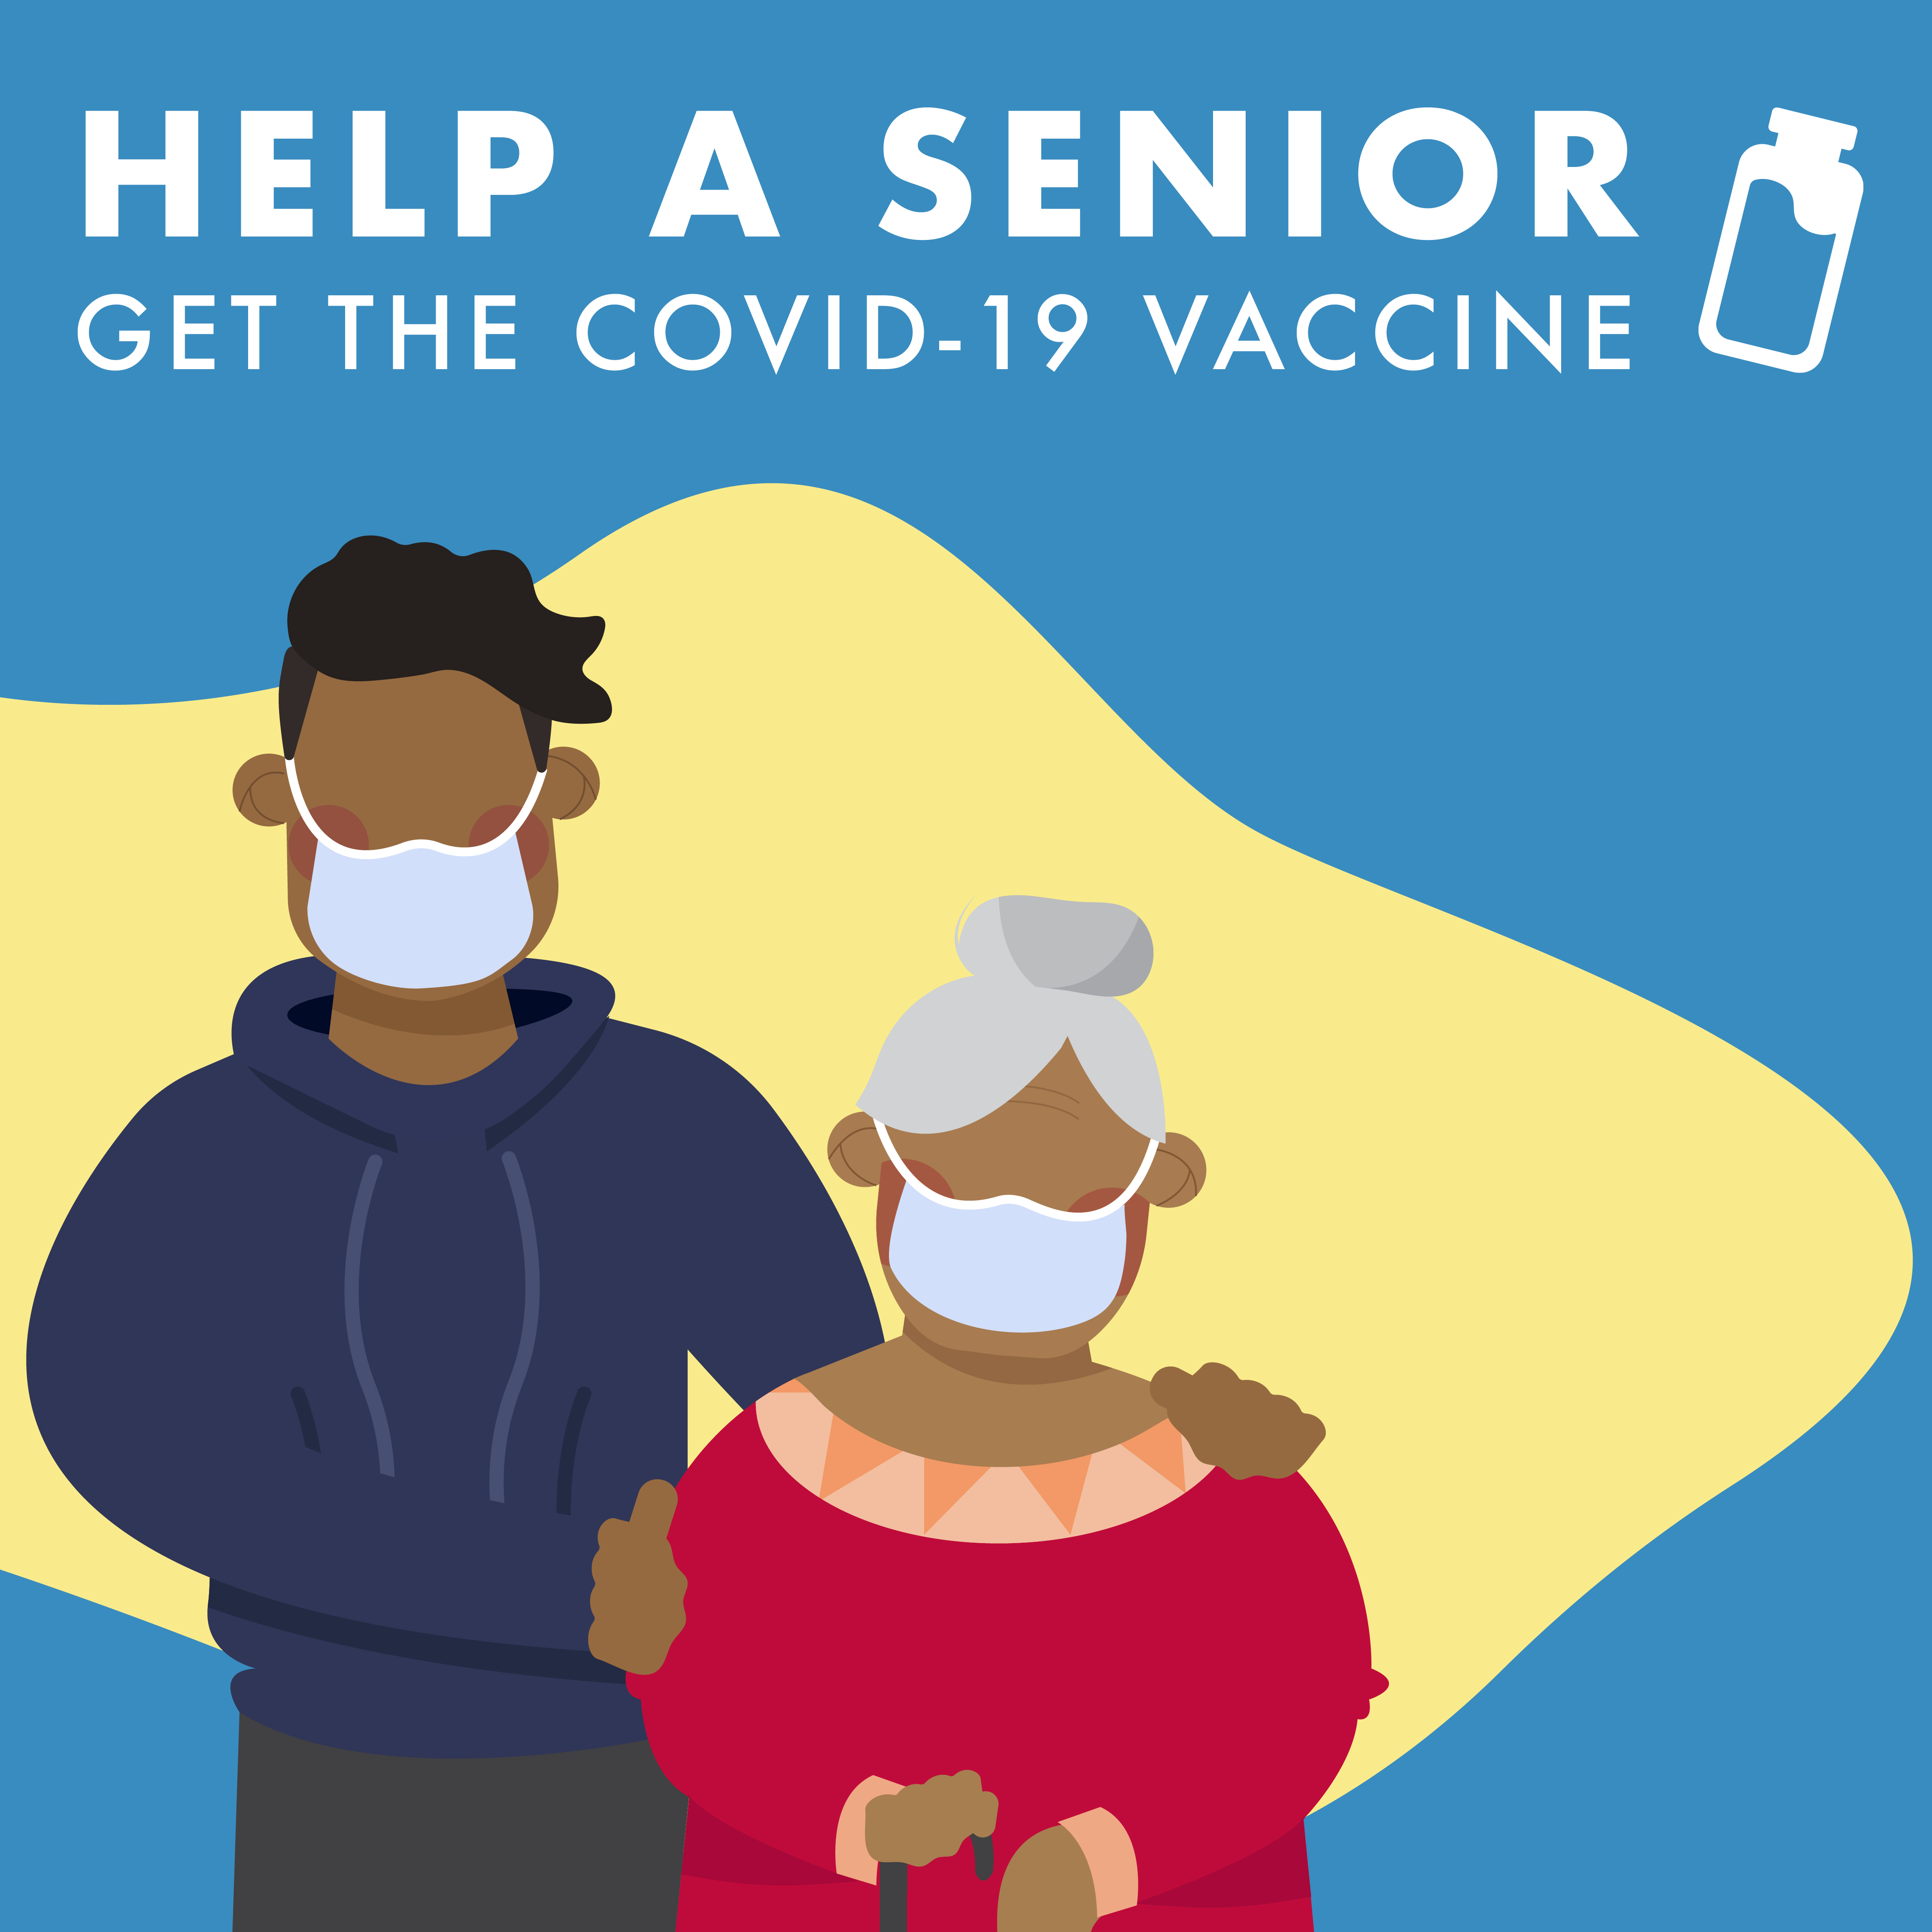 Help a senior get a COVID-19 vaccine